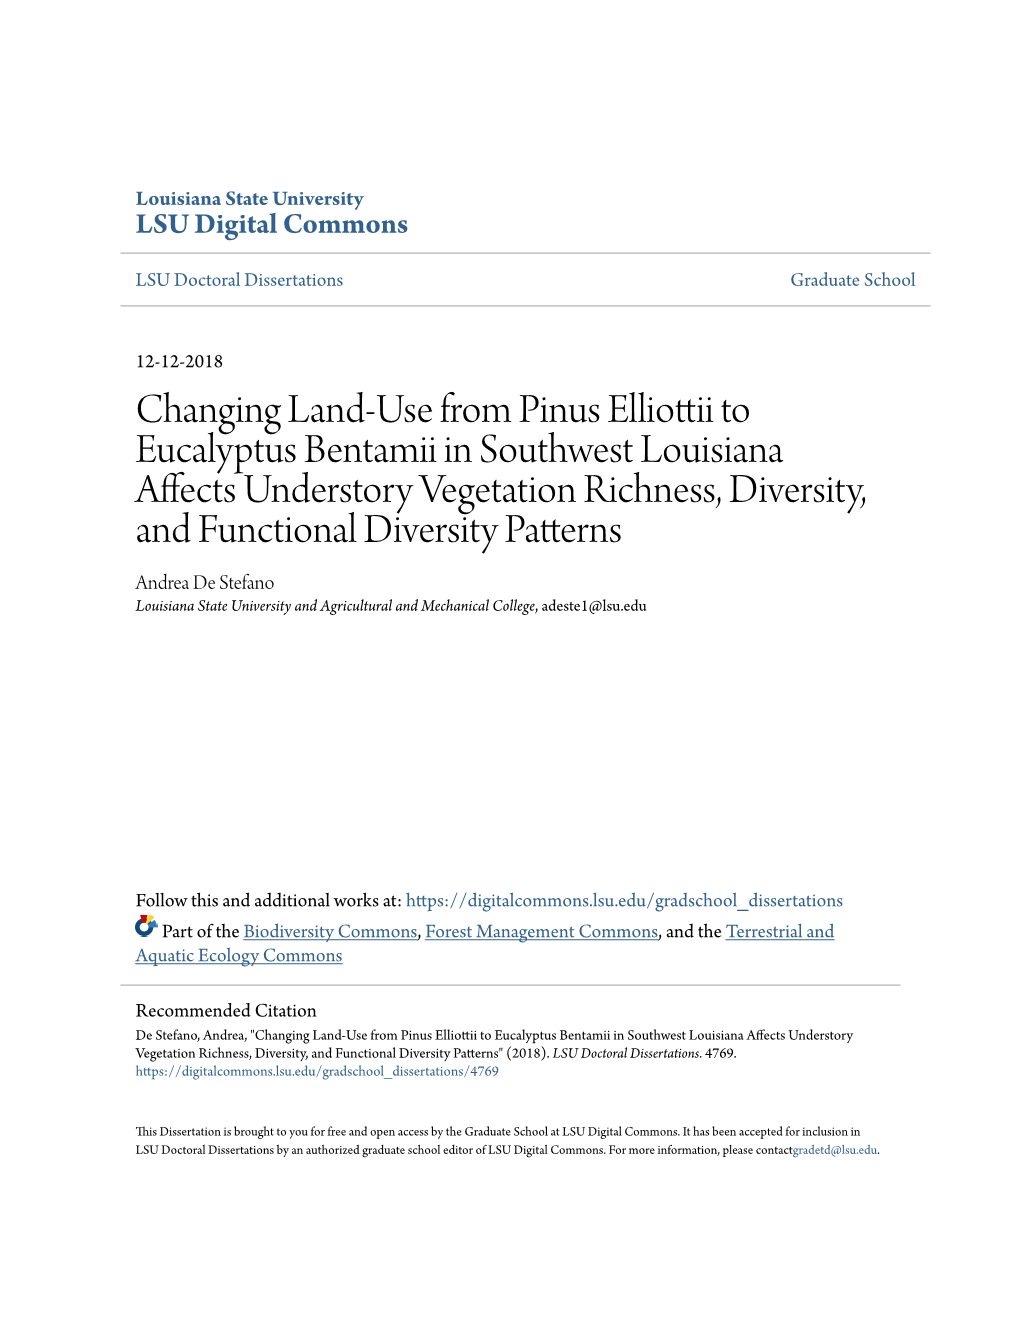 Changing Land-Use from Pinus Elliottii to Eucalyptus Bentamii In